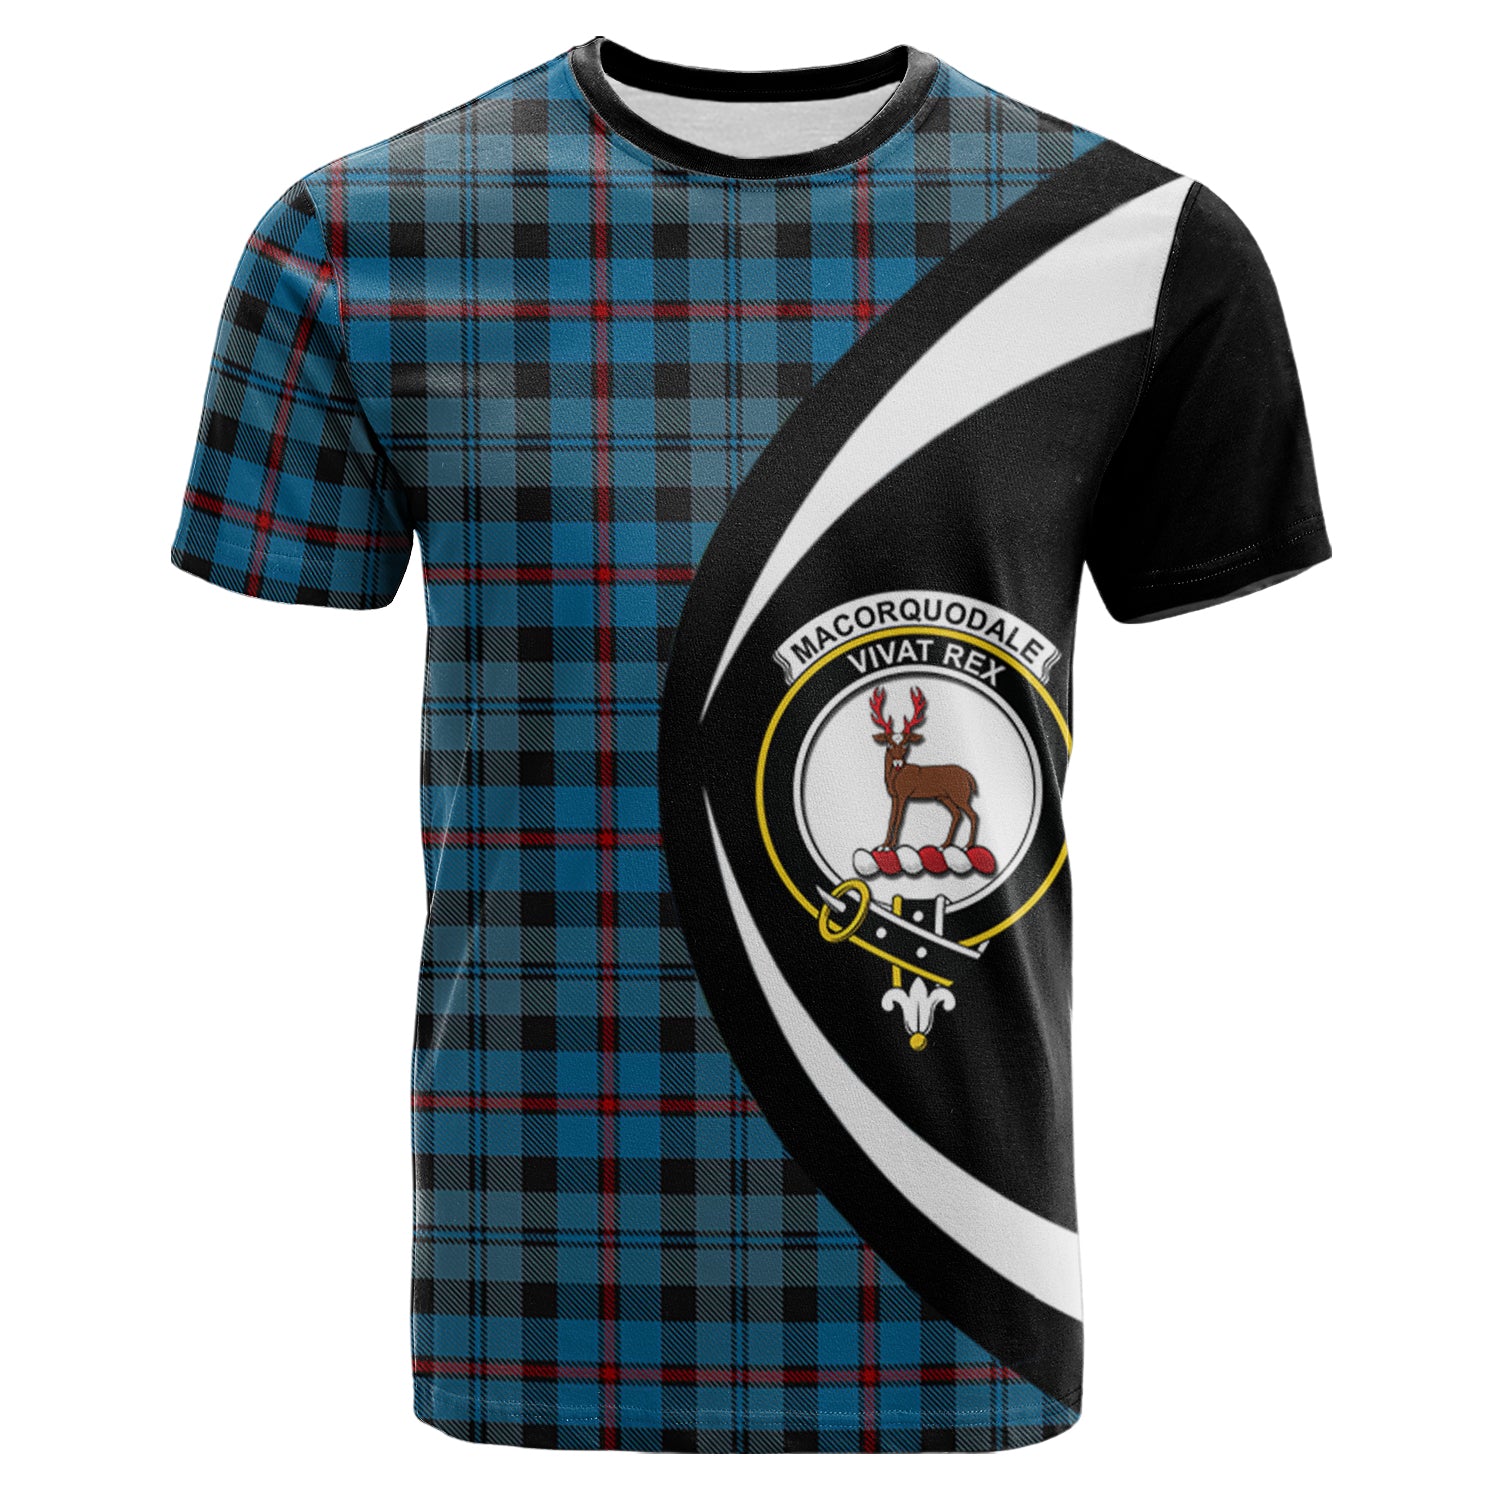 scottish-maccorquodale-clan-crest-circle-style-tartan-t-shirt